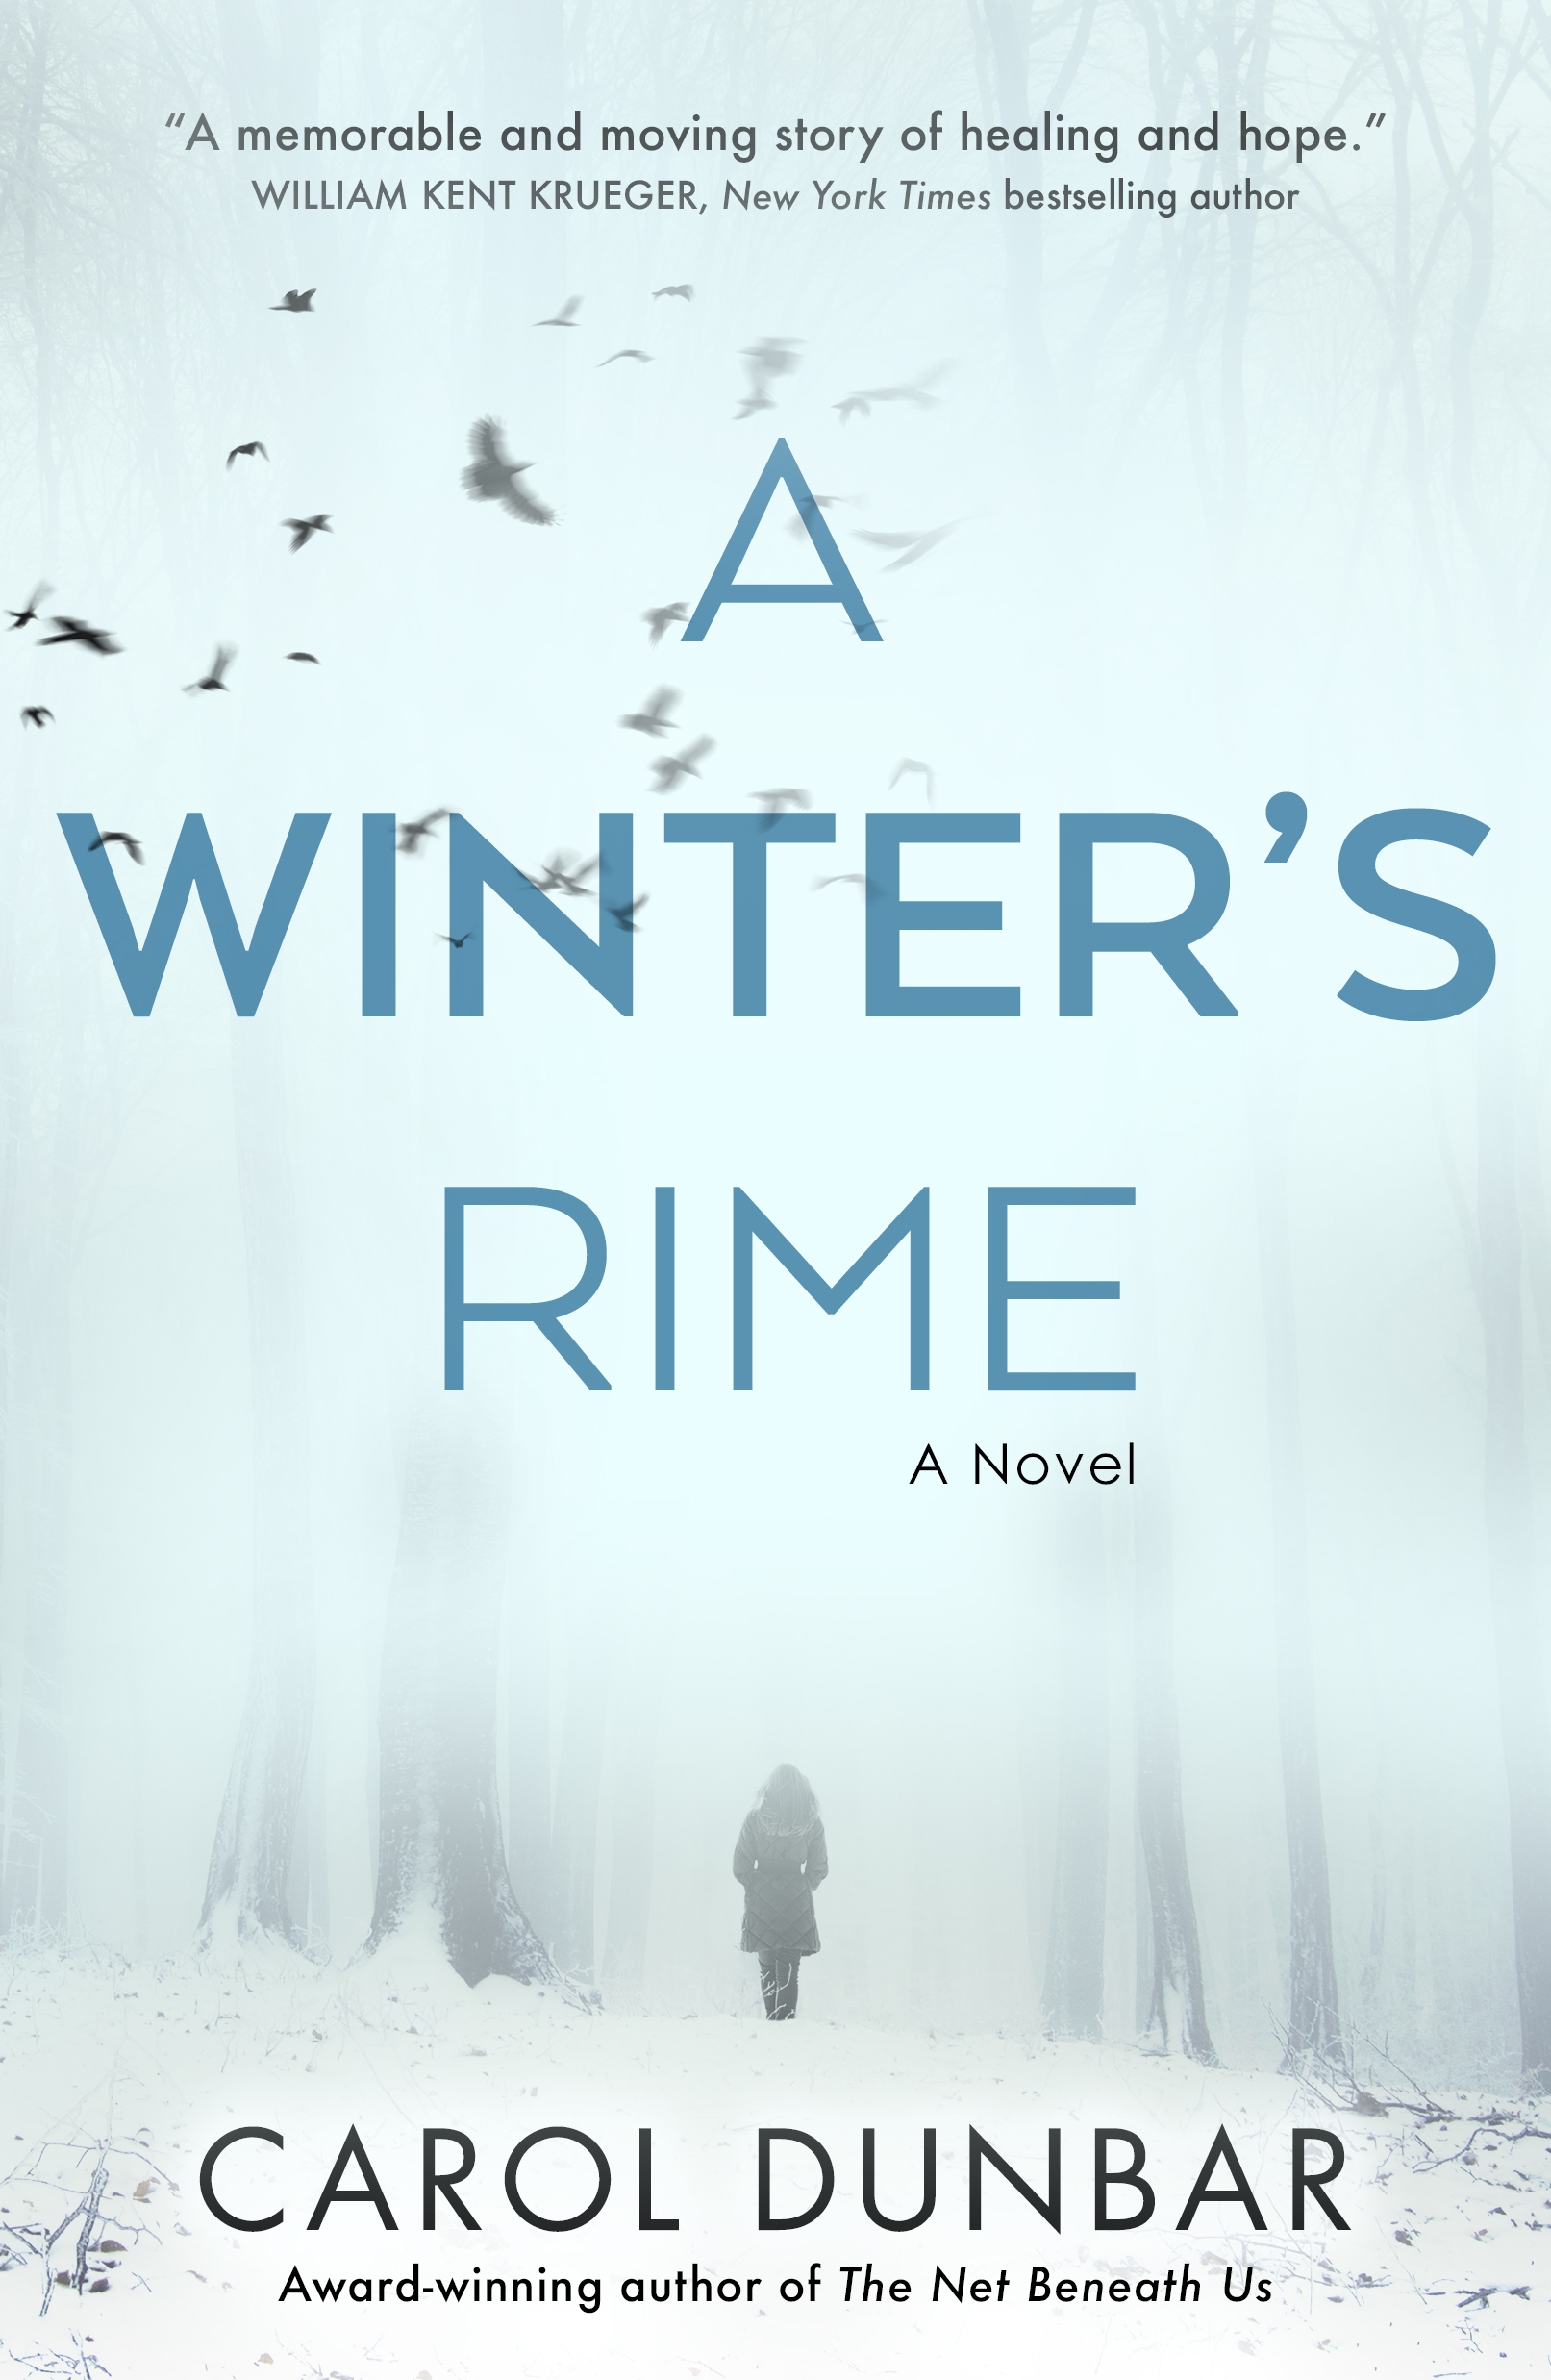 A Winter's Rime : A Novel by Carol Dunbar